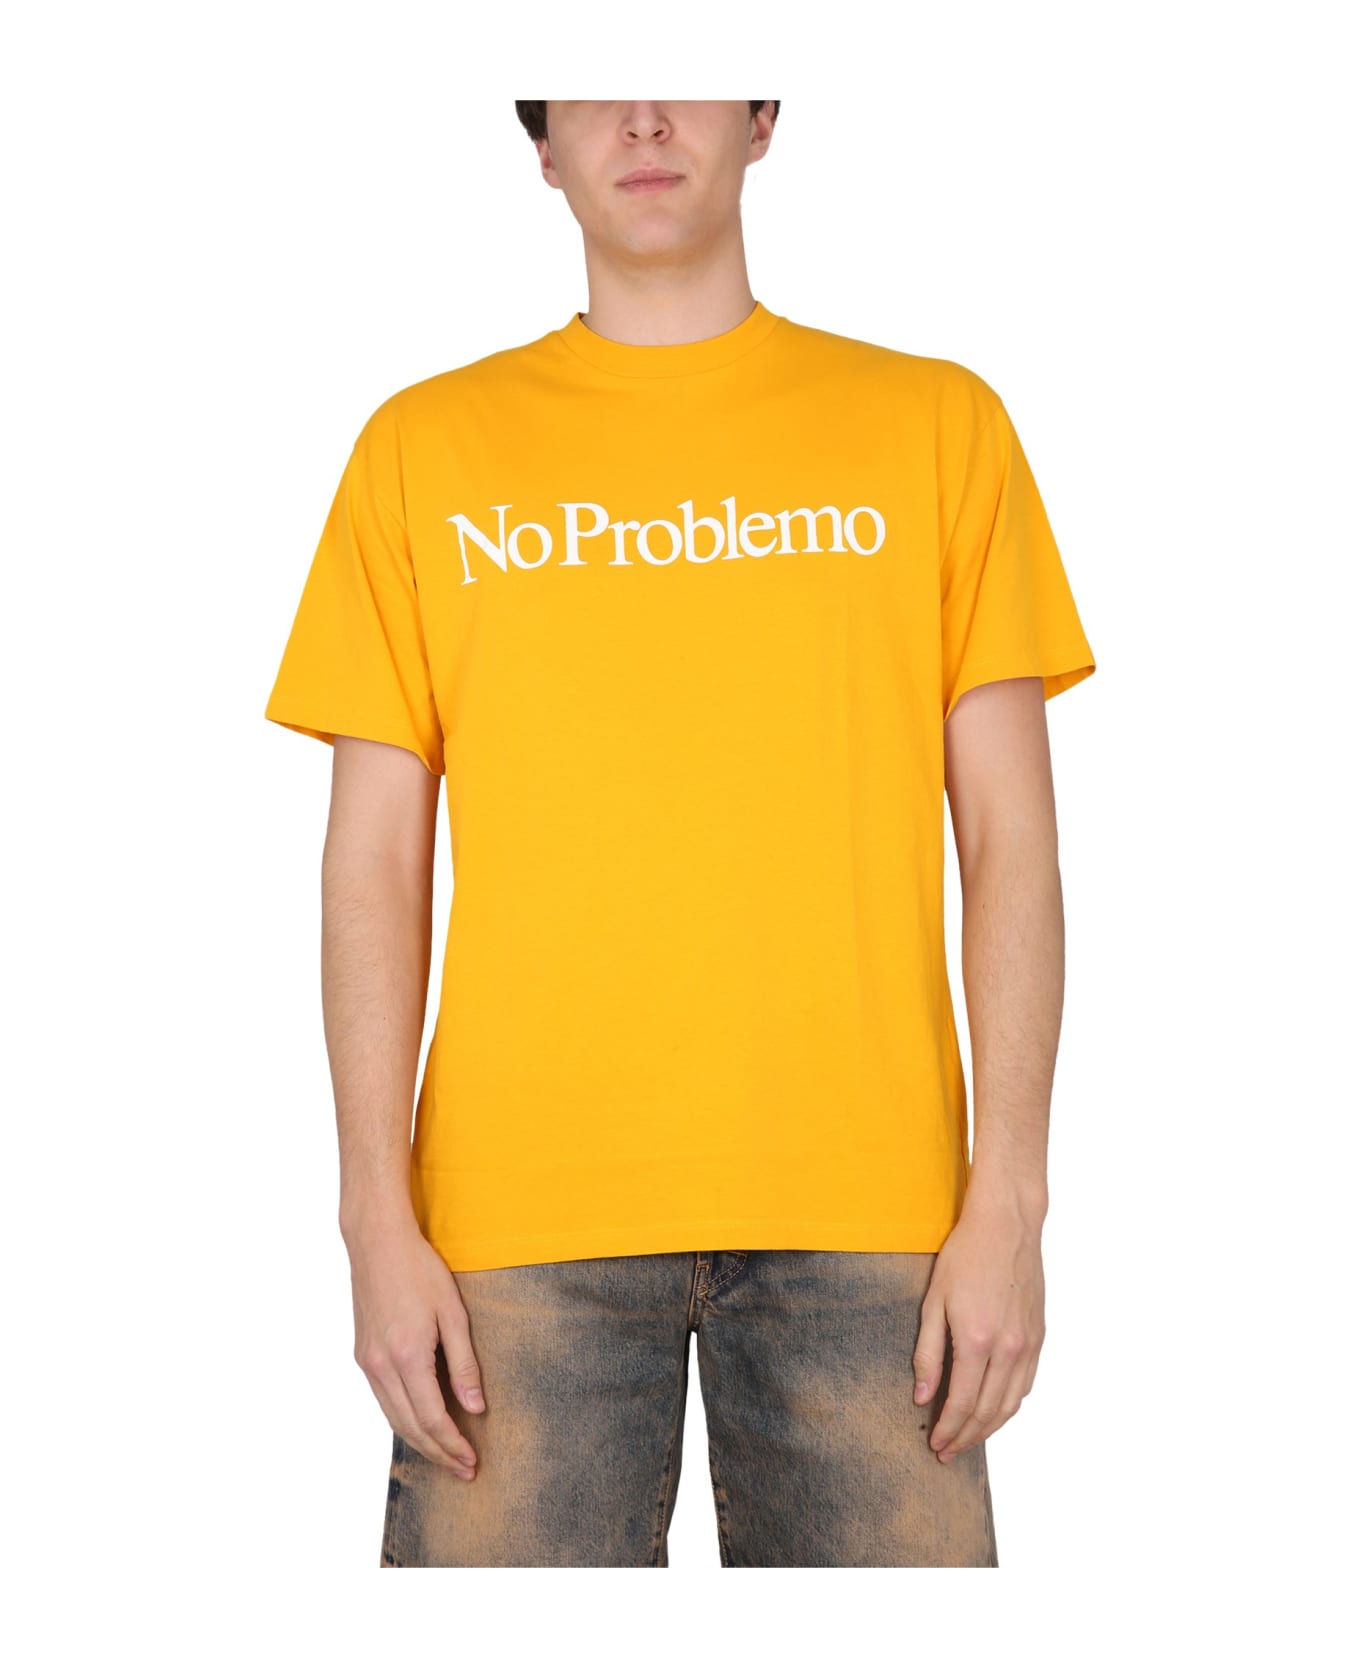 Aries T-shirt No Problemo - Ocra